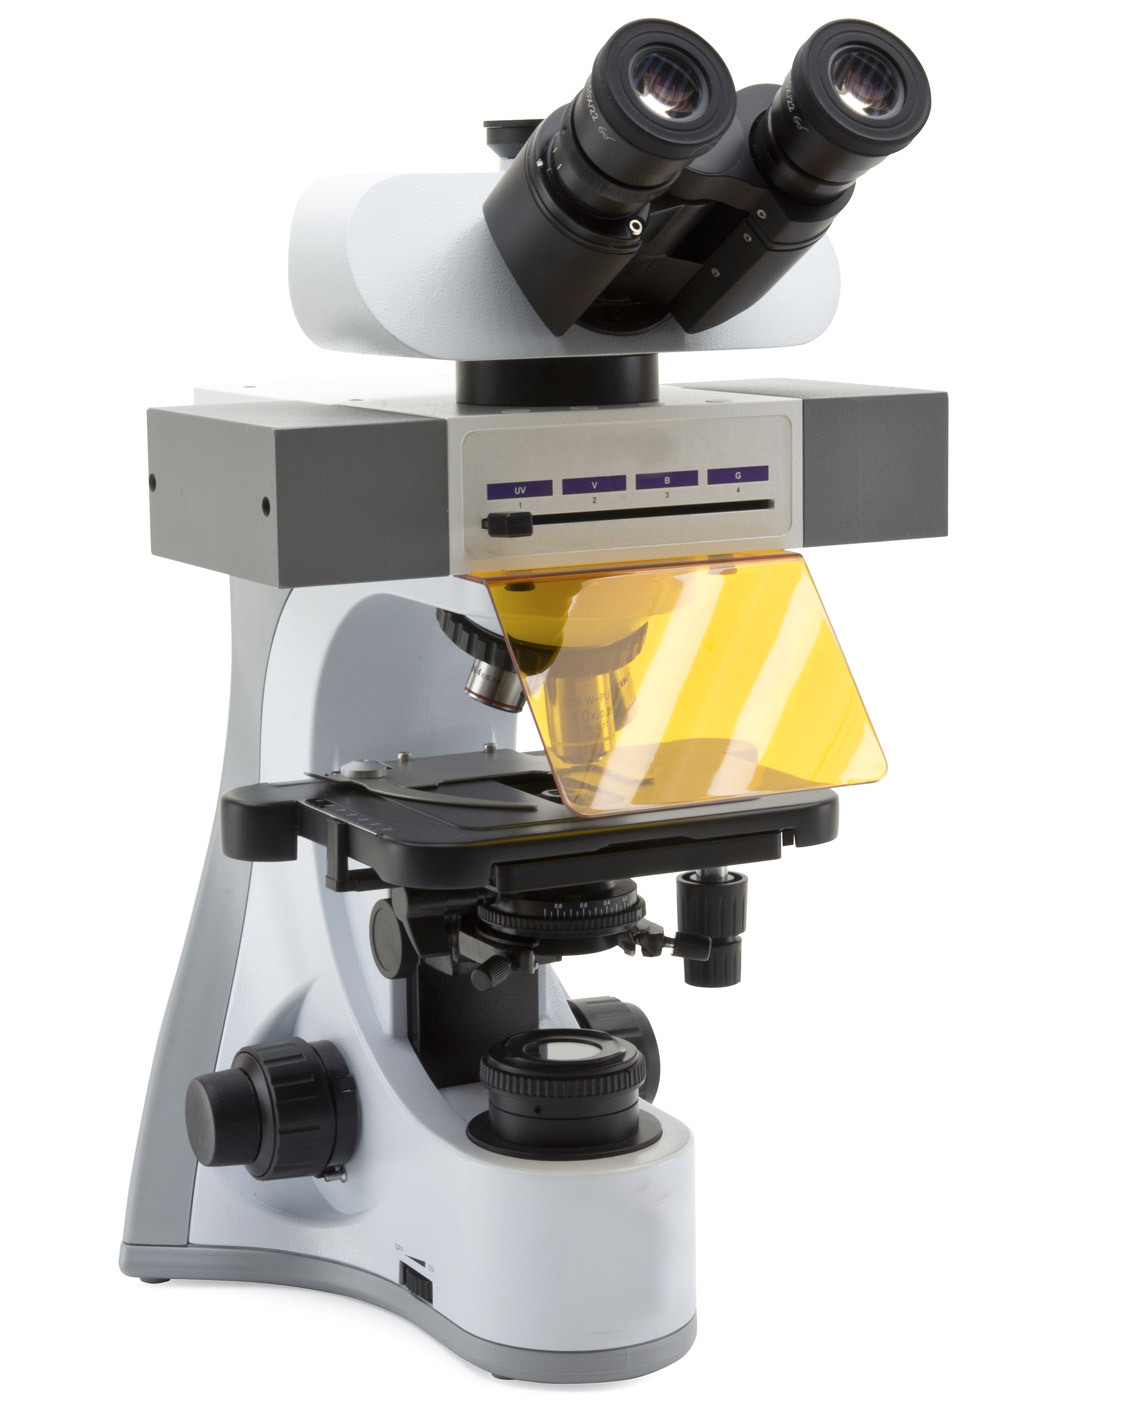 B-510LD4-SA - Trinokulrn laboratorn mikroskop